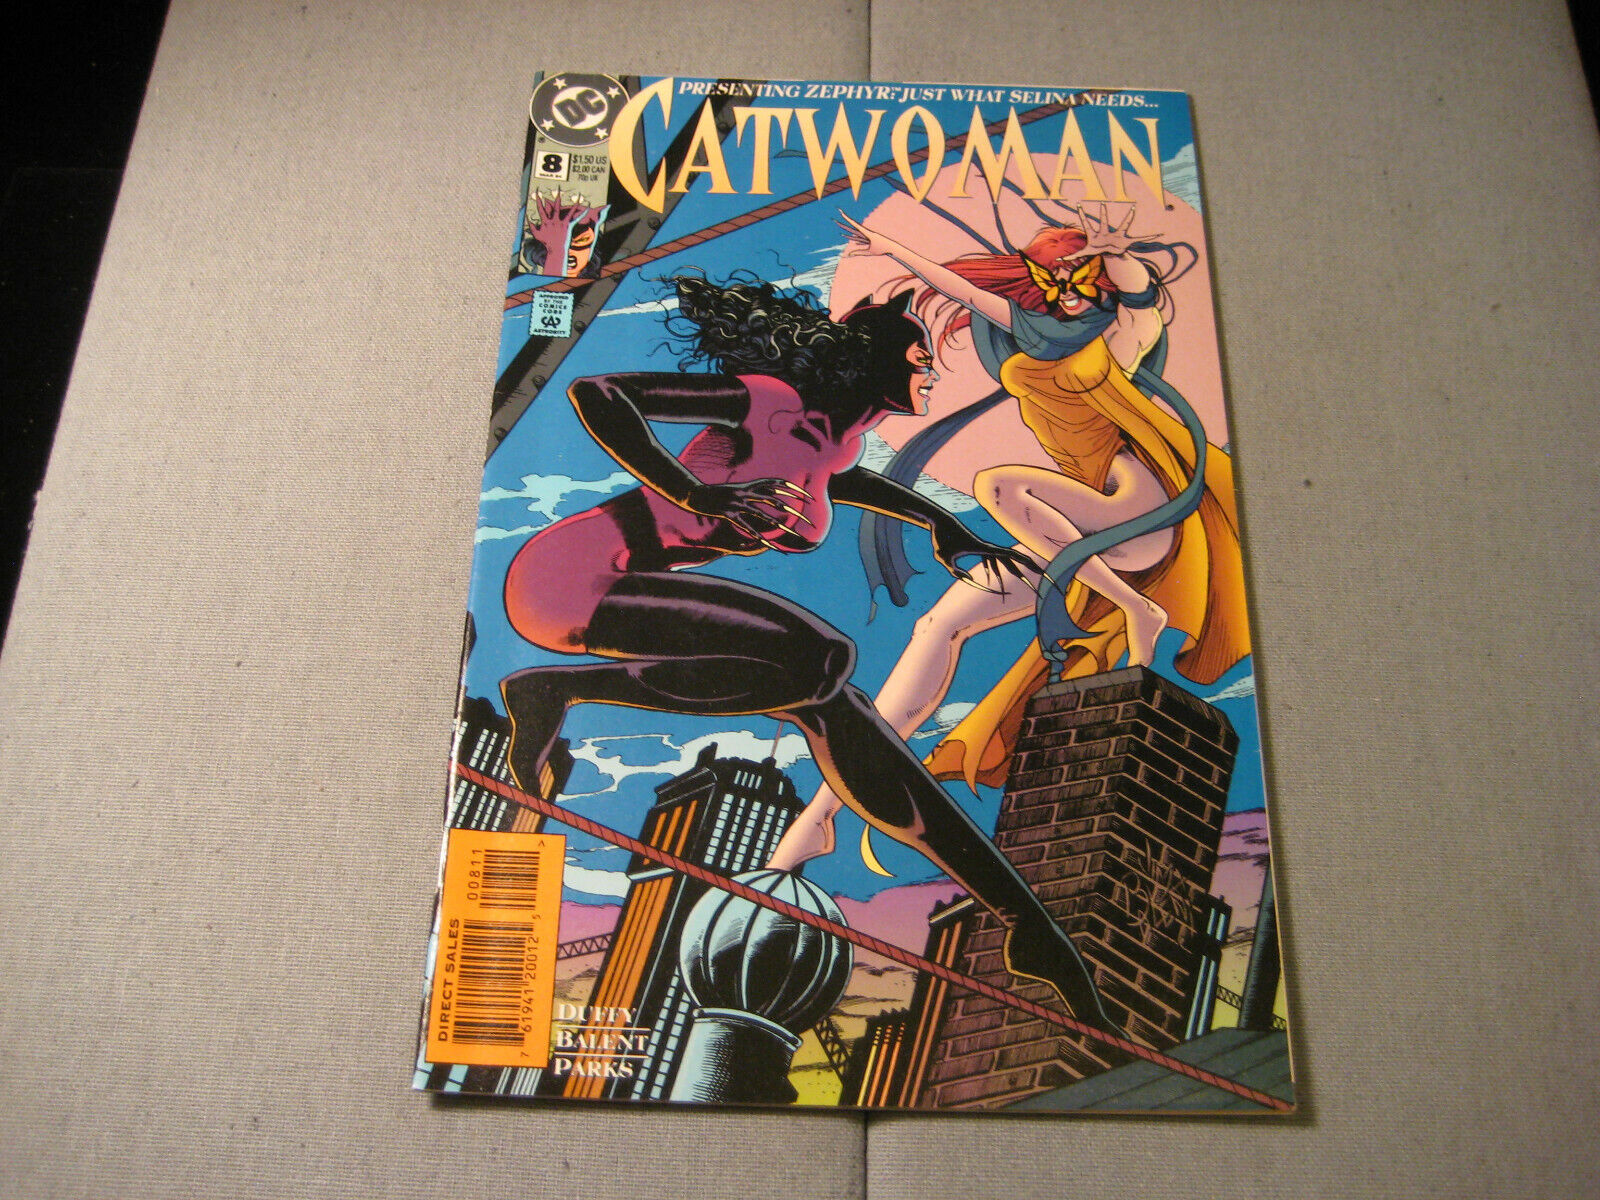 Catwoman #8 (DC Comics, 1994)